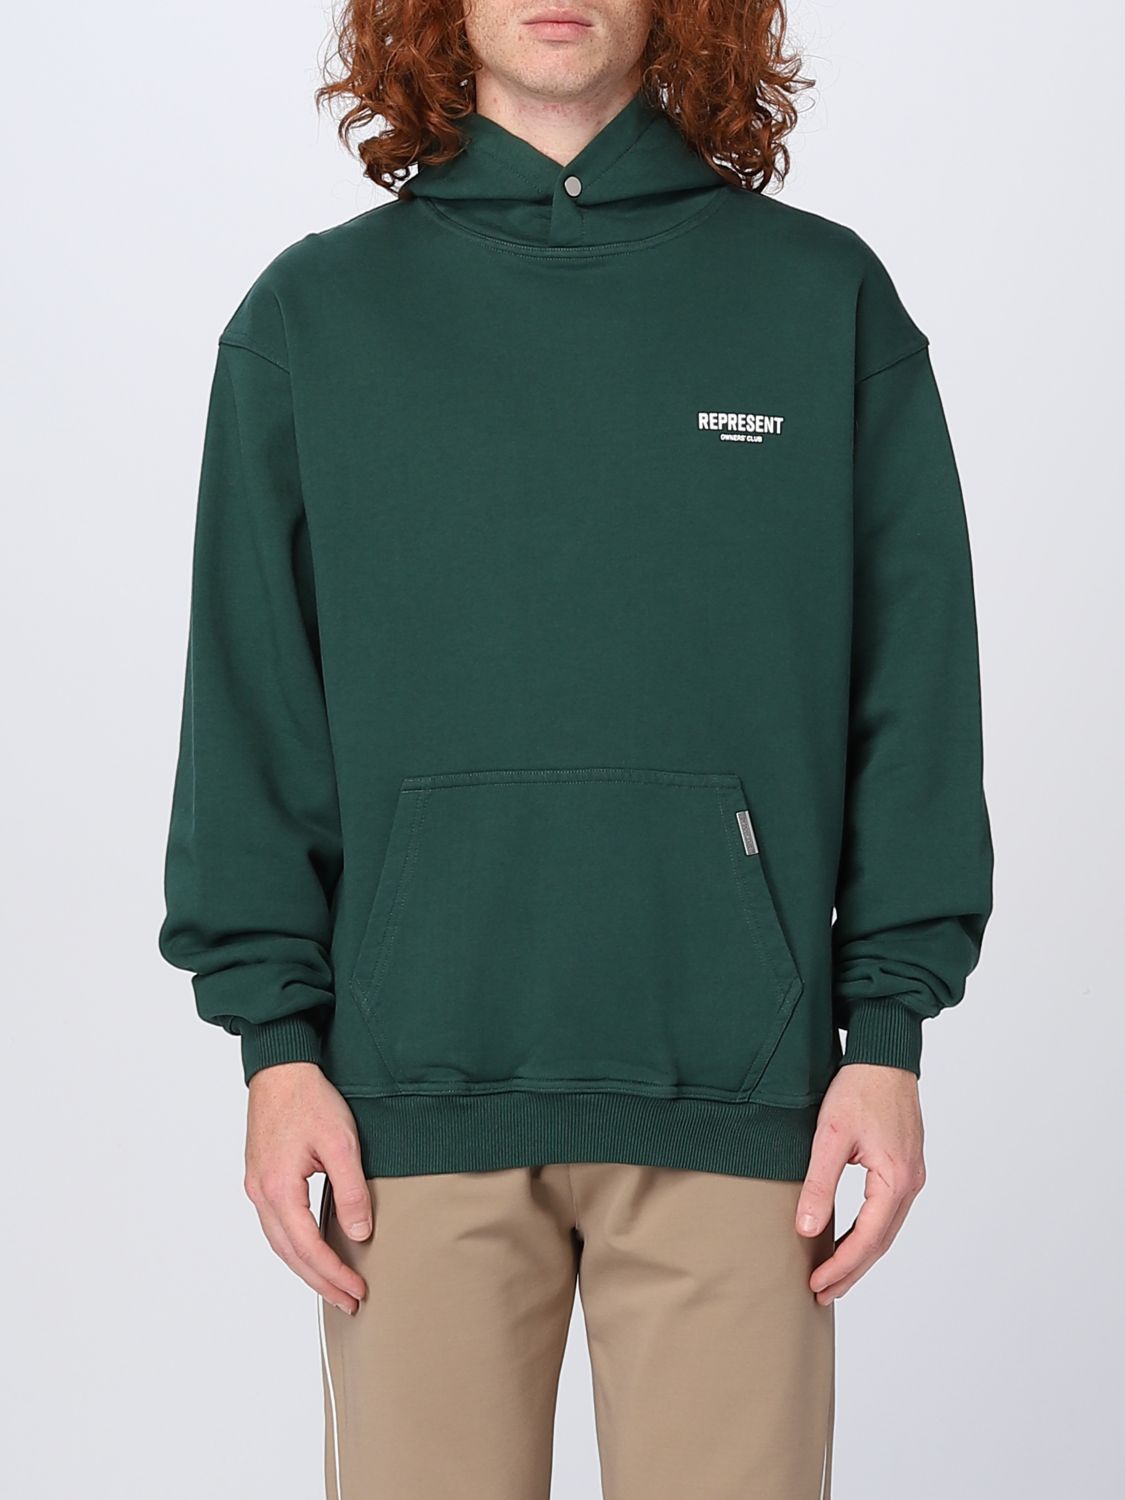 REPRESENT: sweatshirt for man - Green | Represent sweatshirt M04153 ...